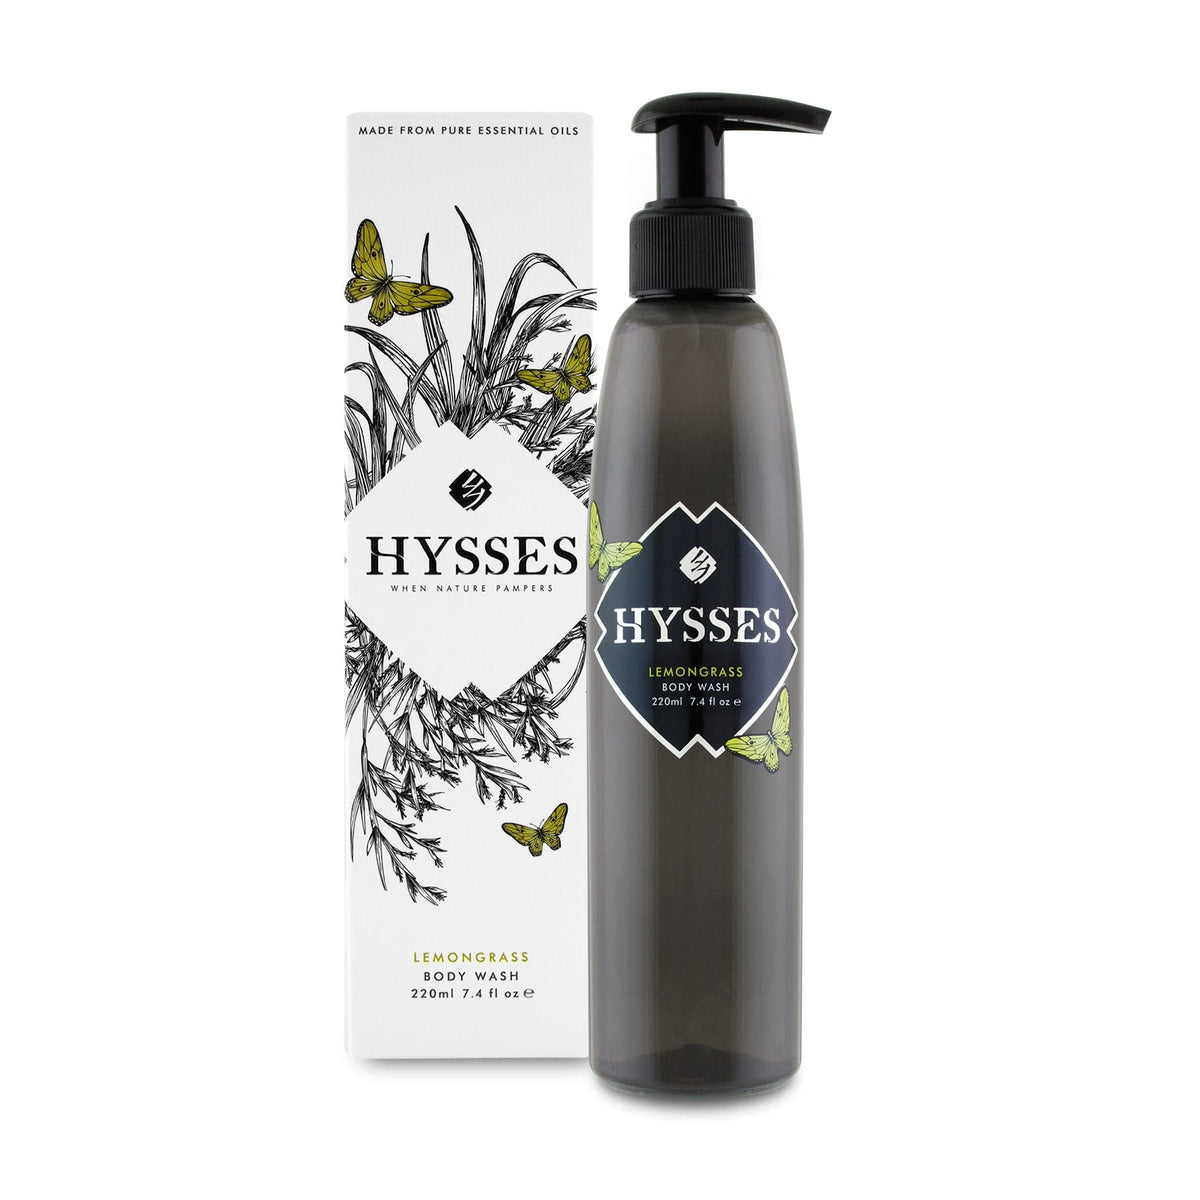 Hysses Body Care 220ml Body Wash Lemongrass